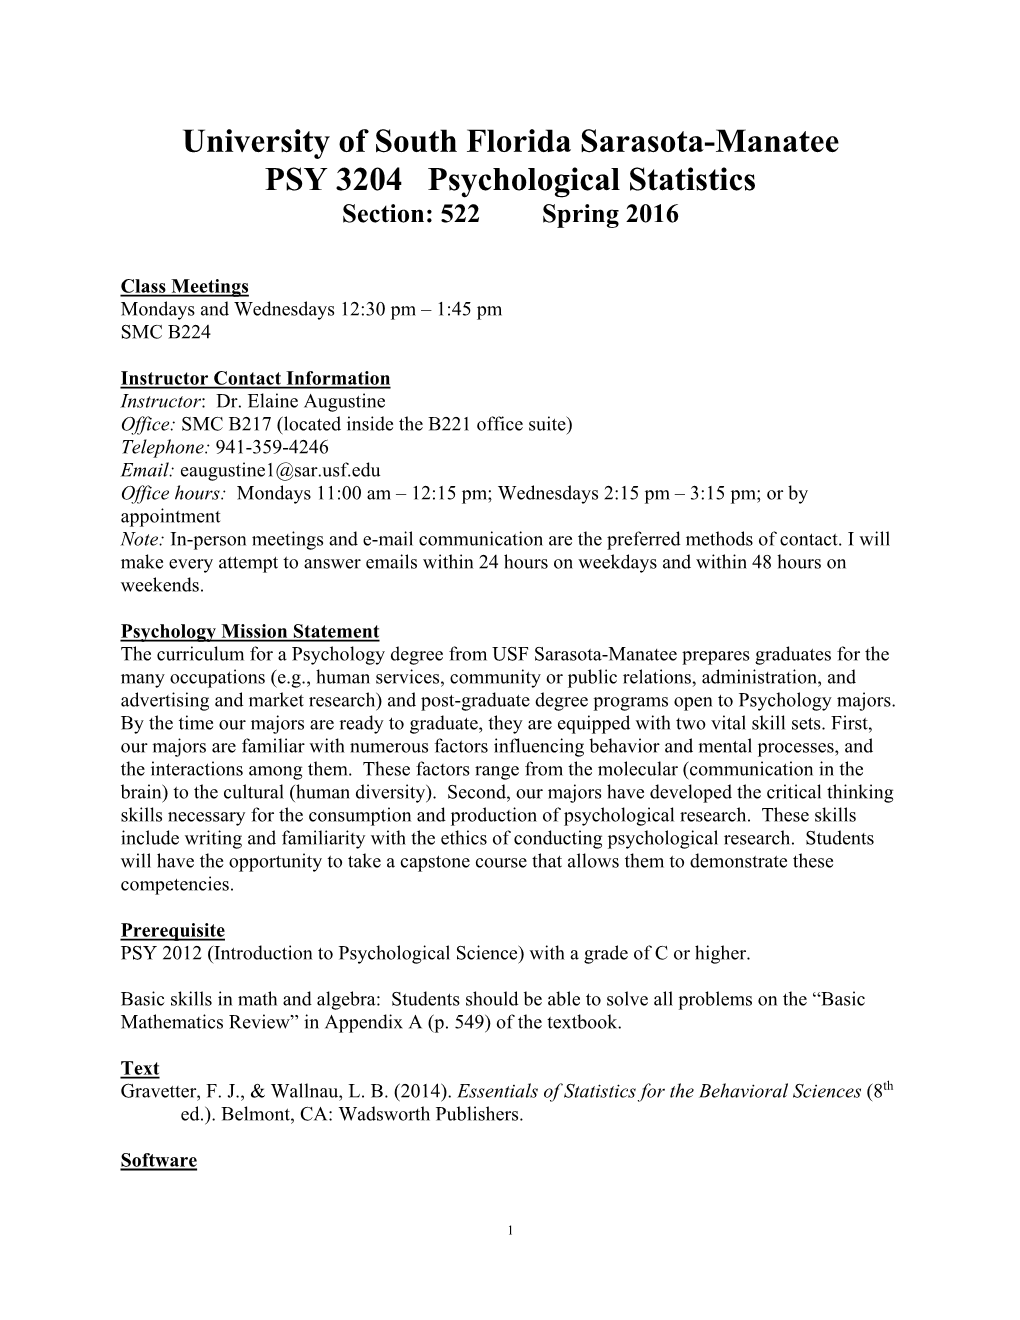 University of South Florida Sarasota-Manatee PSY 3204 Psychological Statistics Section: 522 Spring 2016